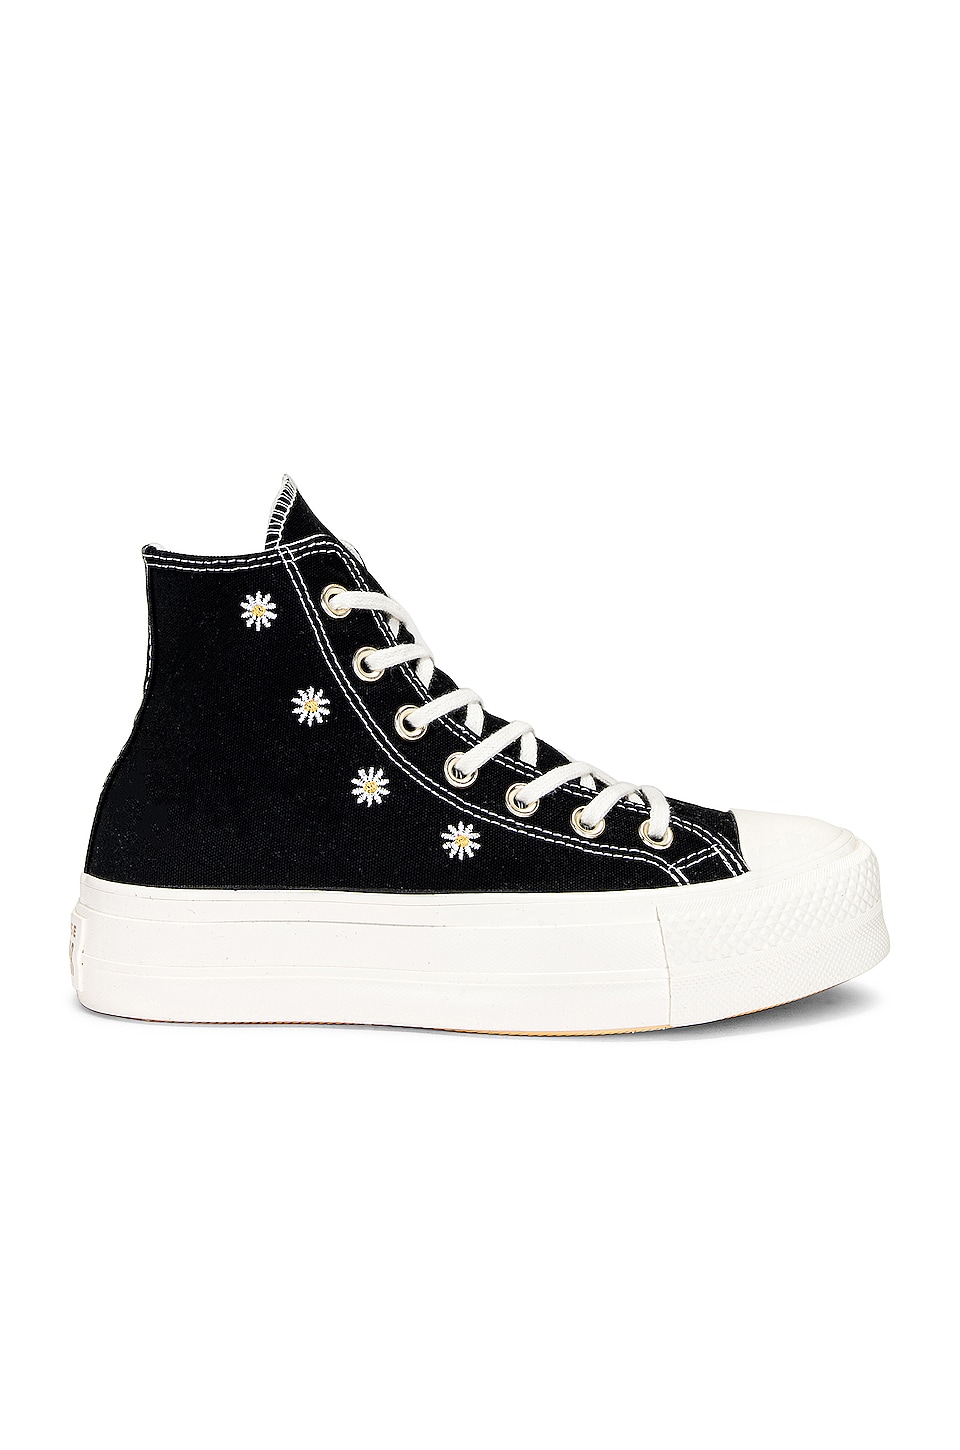 Converse Chuck Taylor All Star Lift Sneaker in Black, Egret, & Light ...